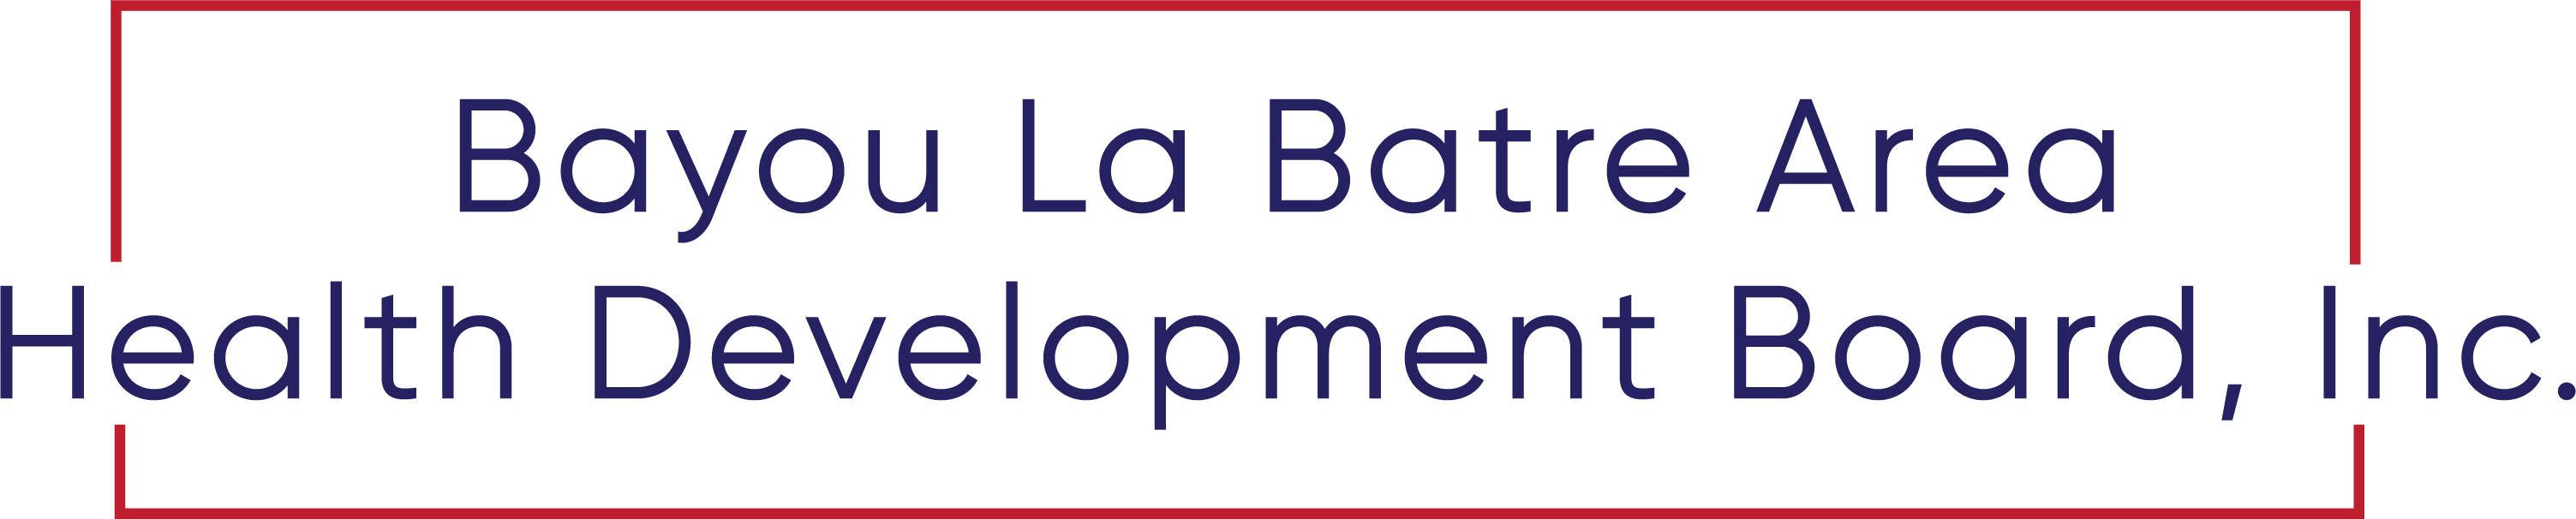 Bayou La Batre Area Health Development Board